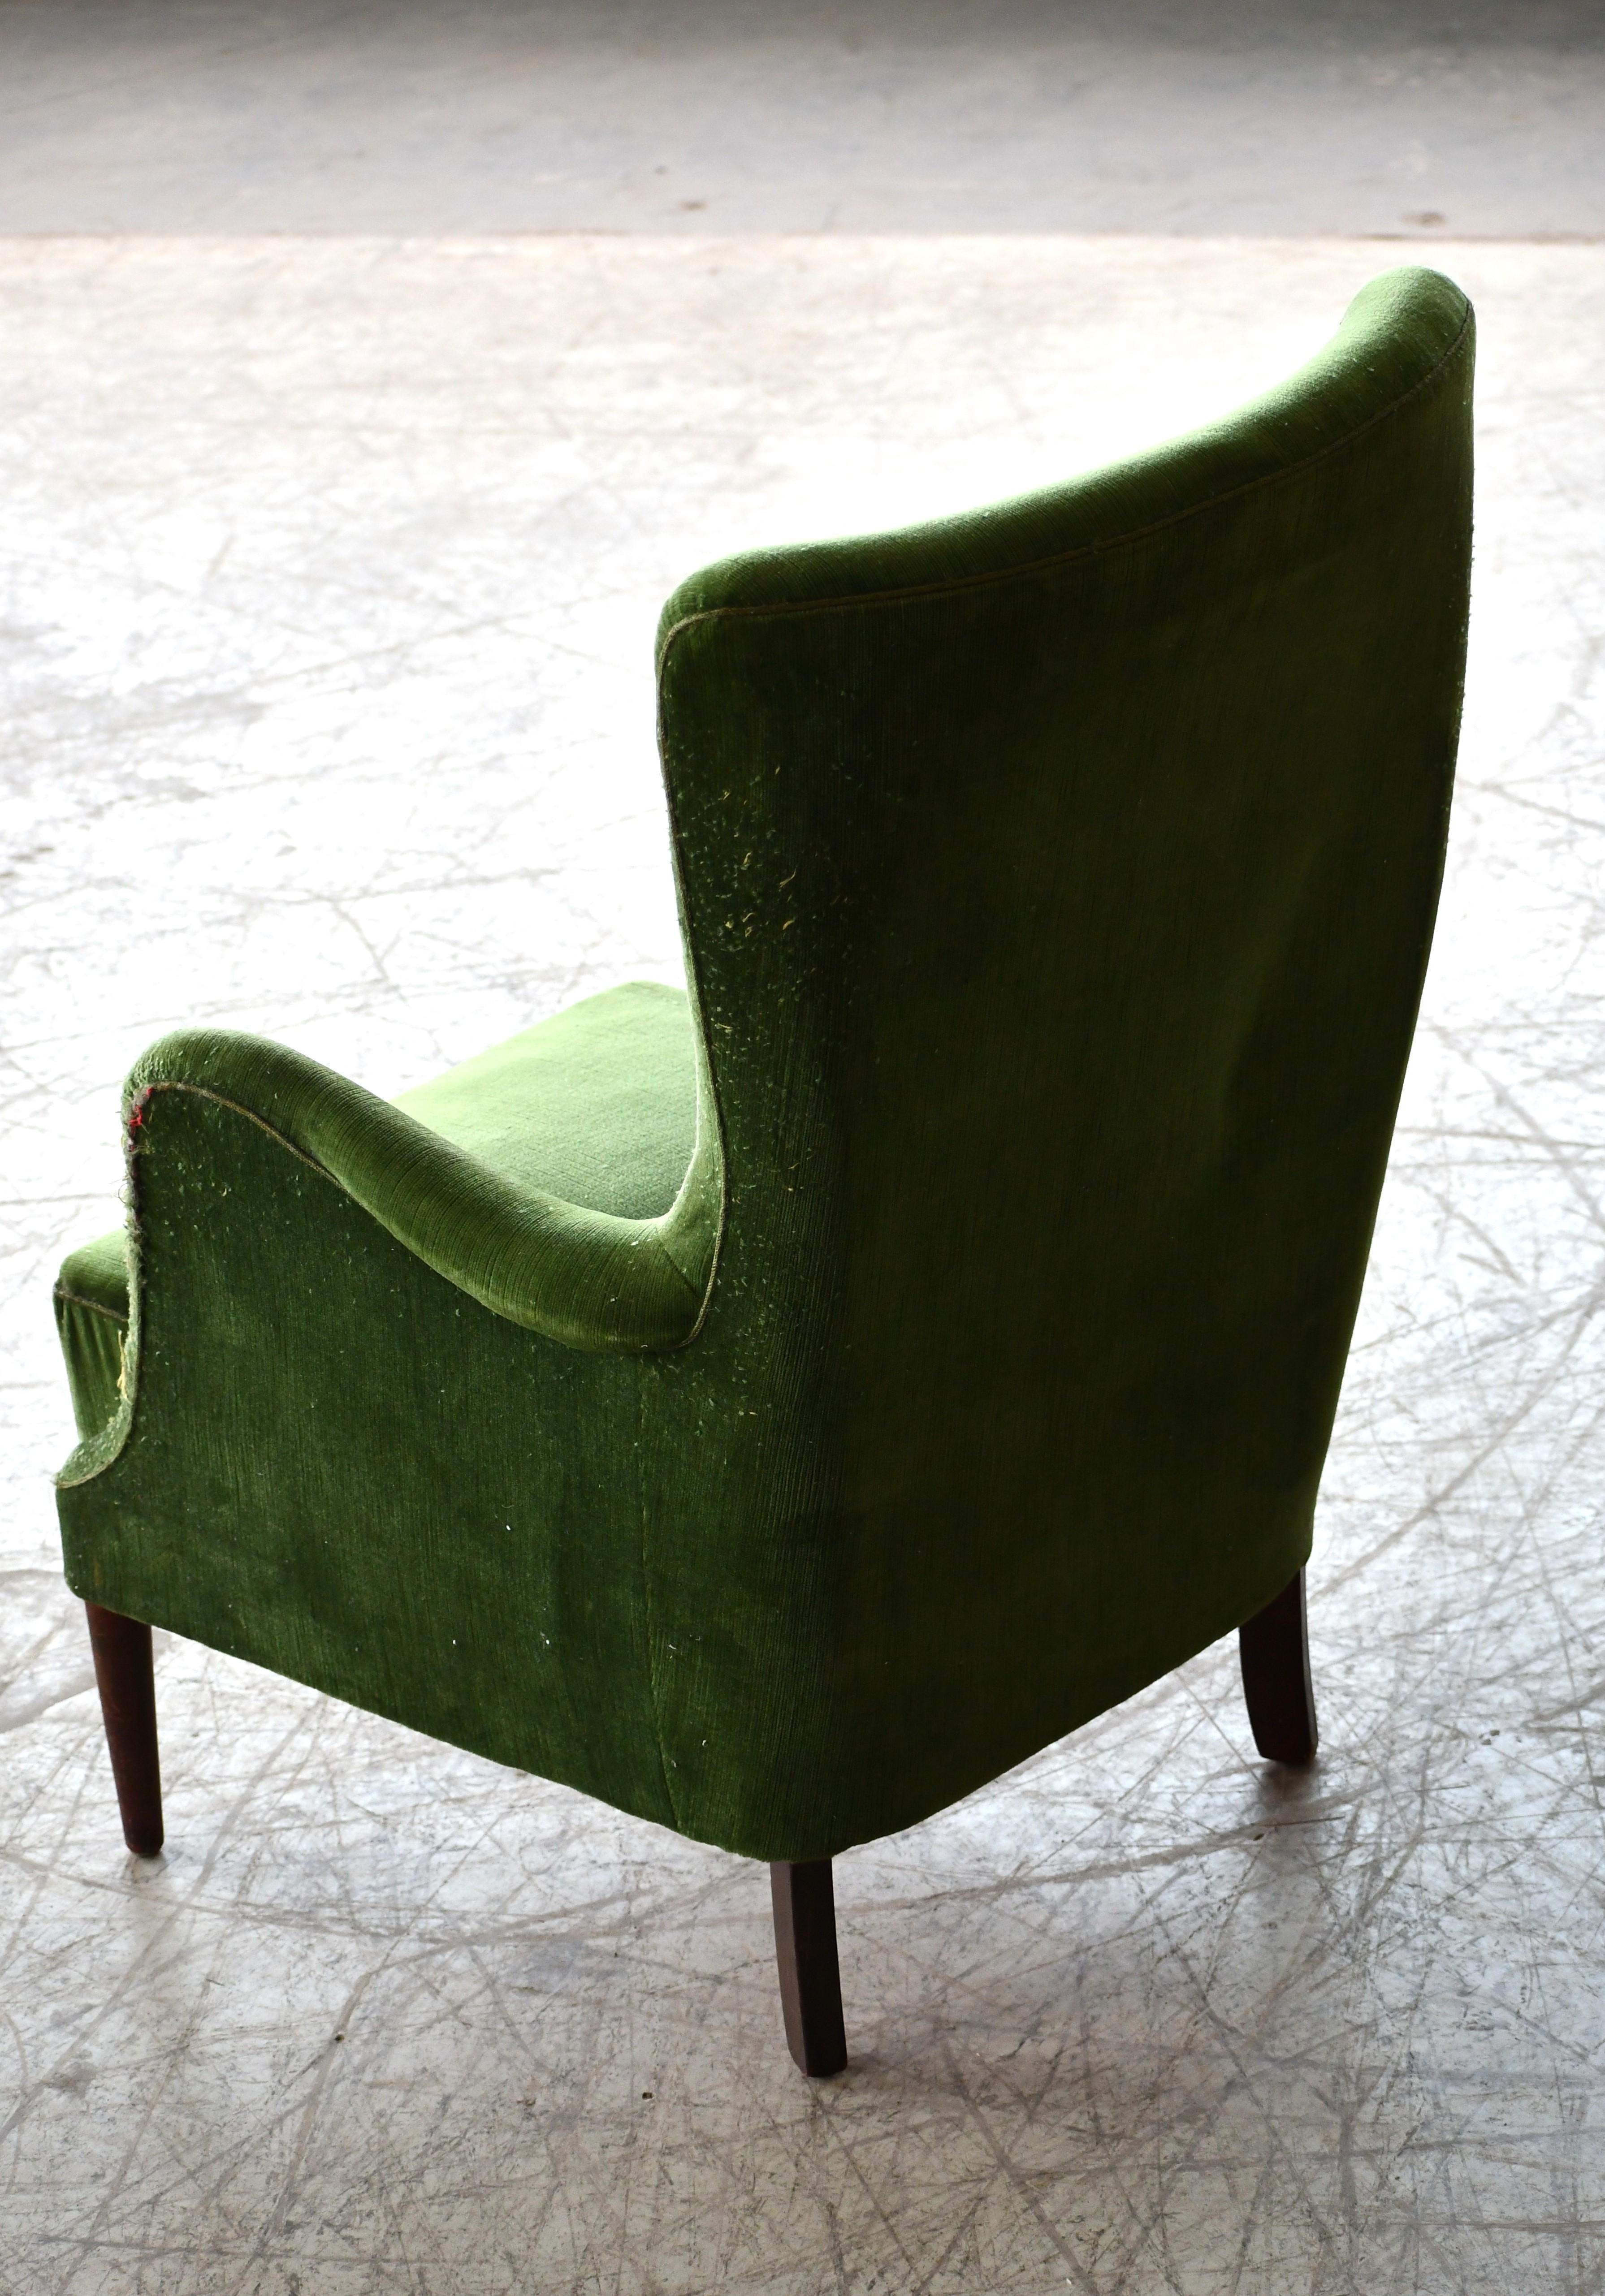 Mohair Peter Hvidt Orla Molgaard Classic Danish 1950s Lounge Chair For Sale